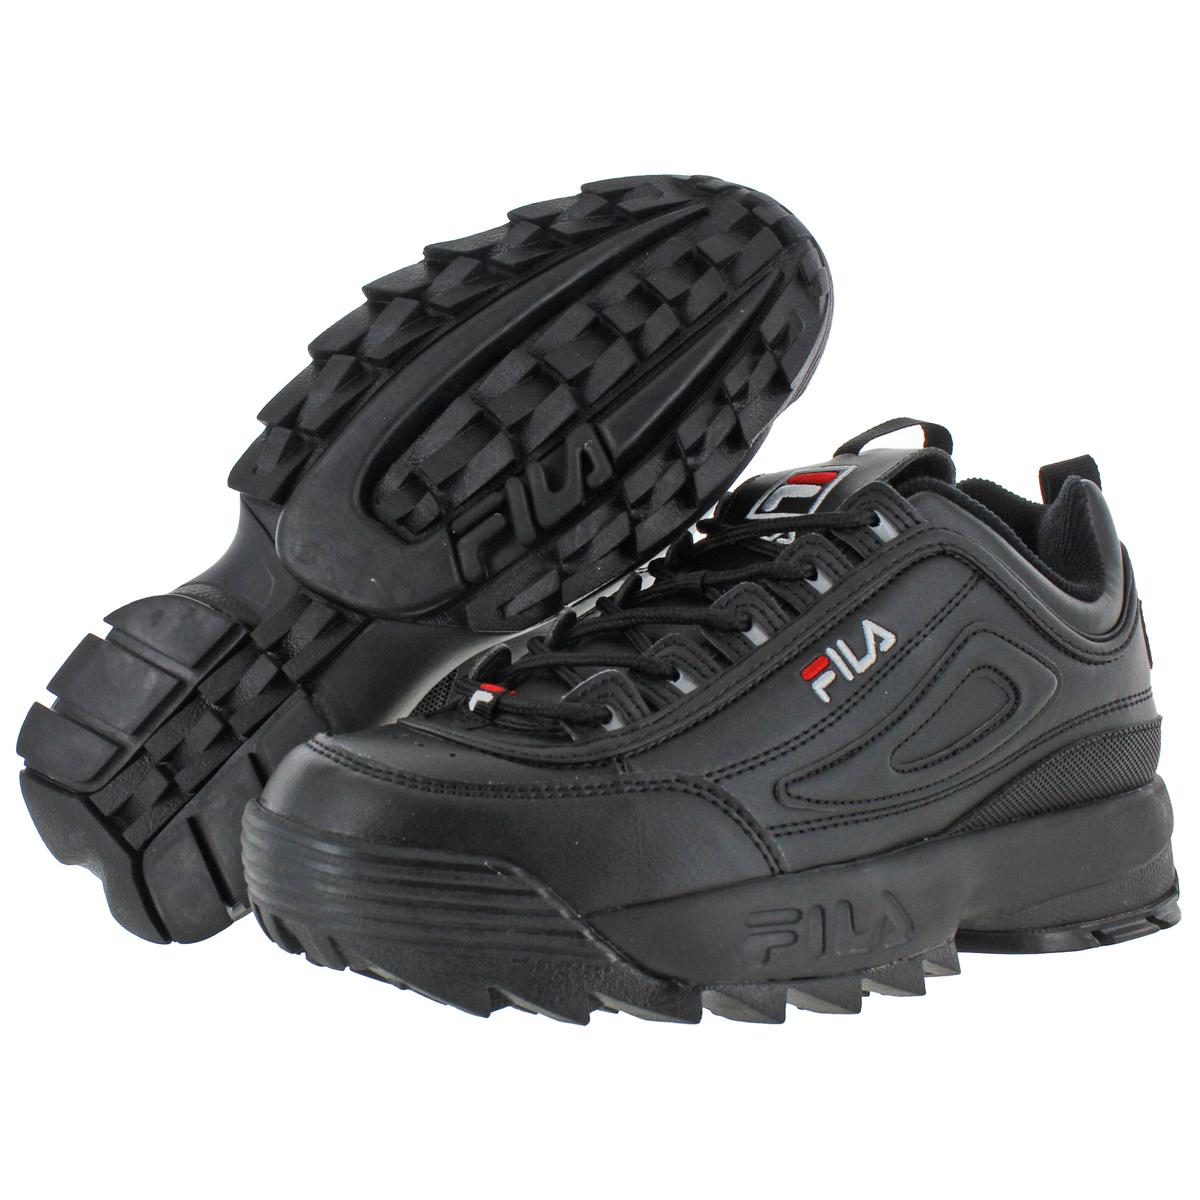 Fila Disruptor II Womens Size 6.5 Black Faux Leather SNEAKERS Shoes UK 5.5 EU 39 for sale online ...